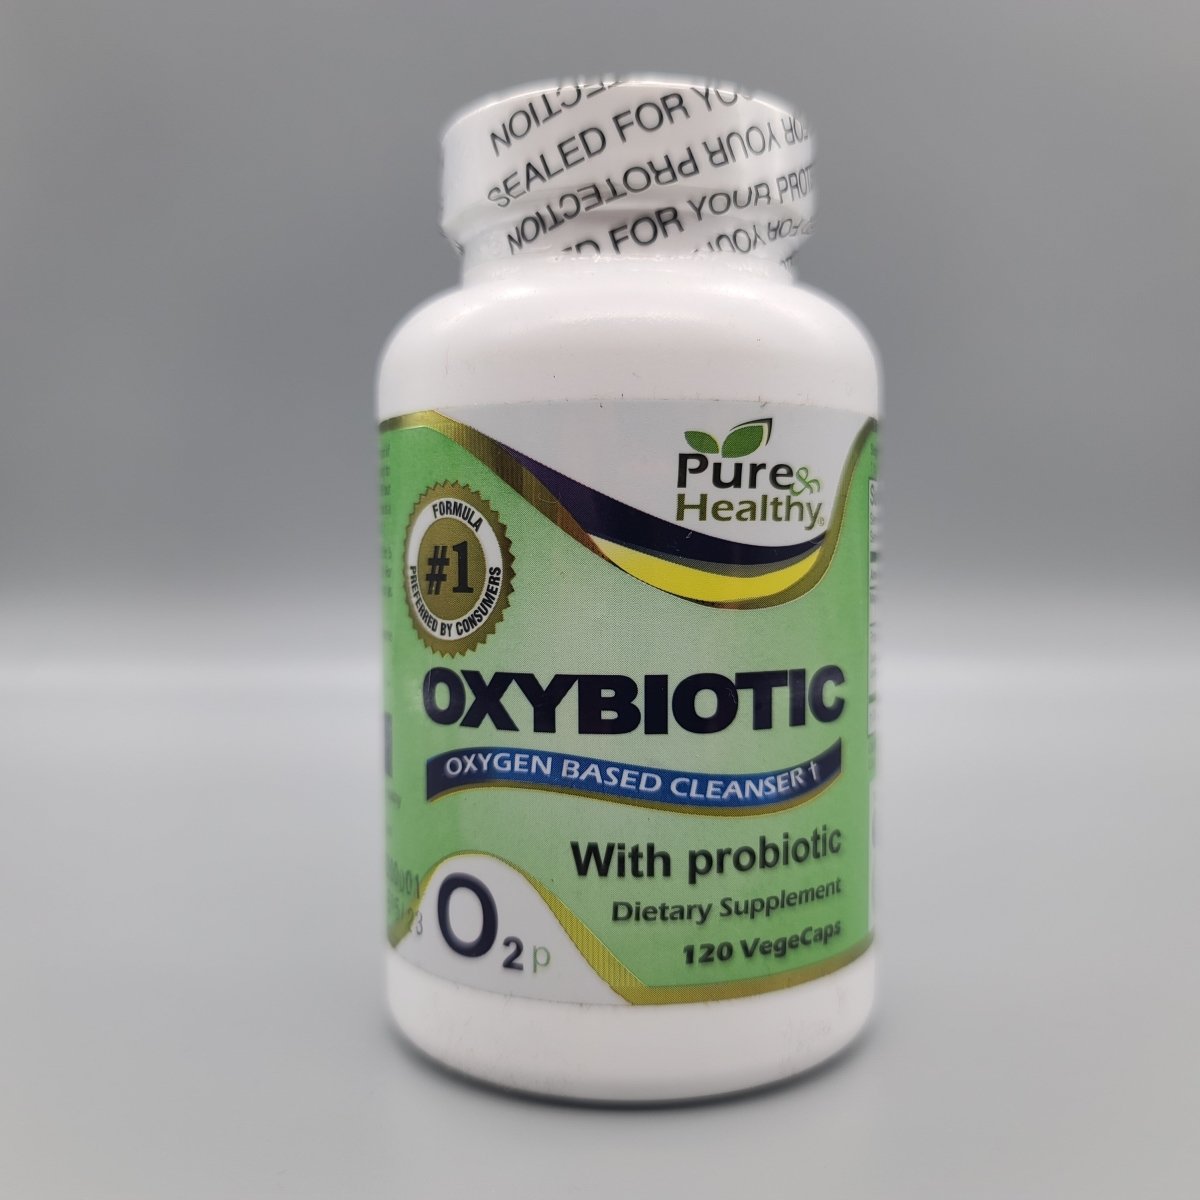 OXYBIOTIC - Oxygen Based Cleanse - With Probiotic - 120 VegeCaps